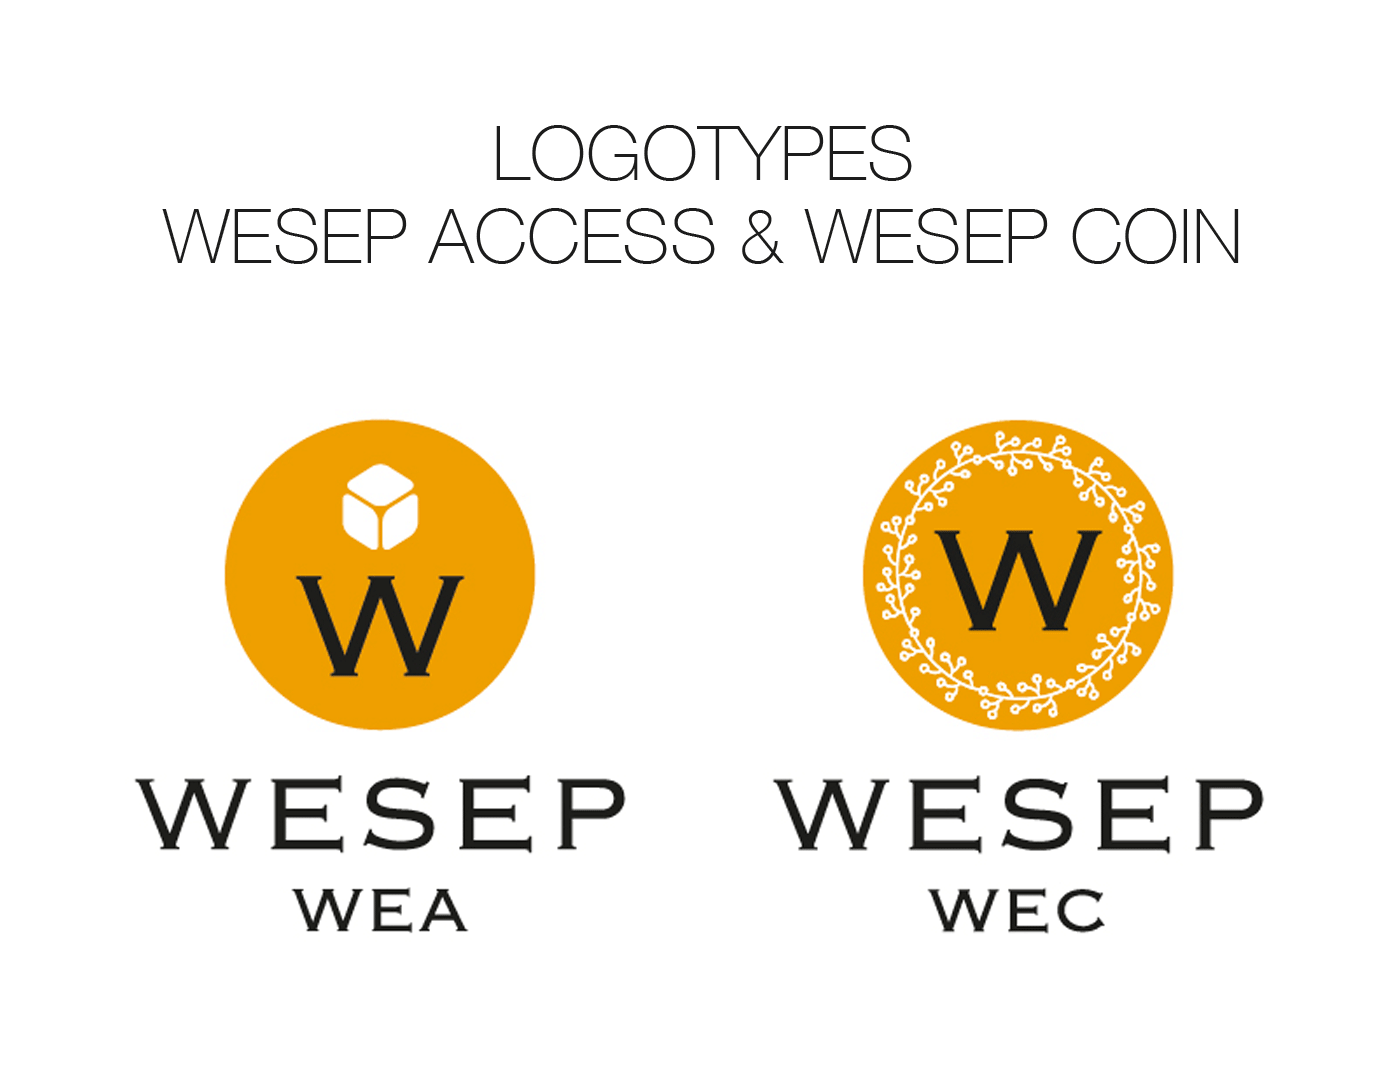 Création des logotypes WESEP